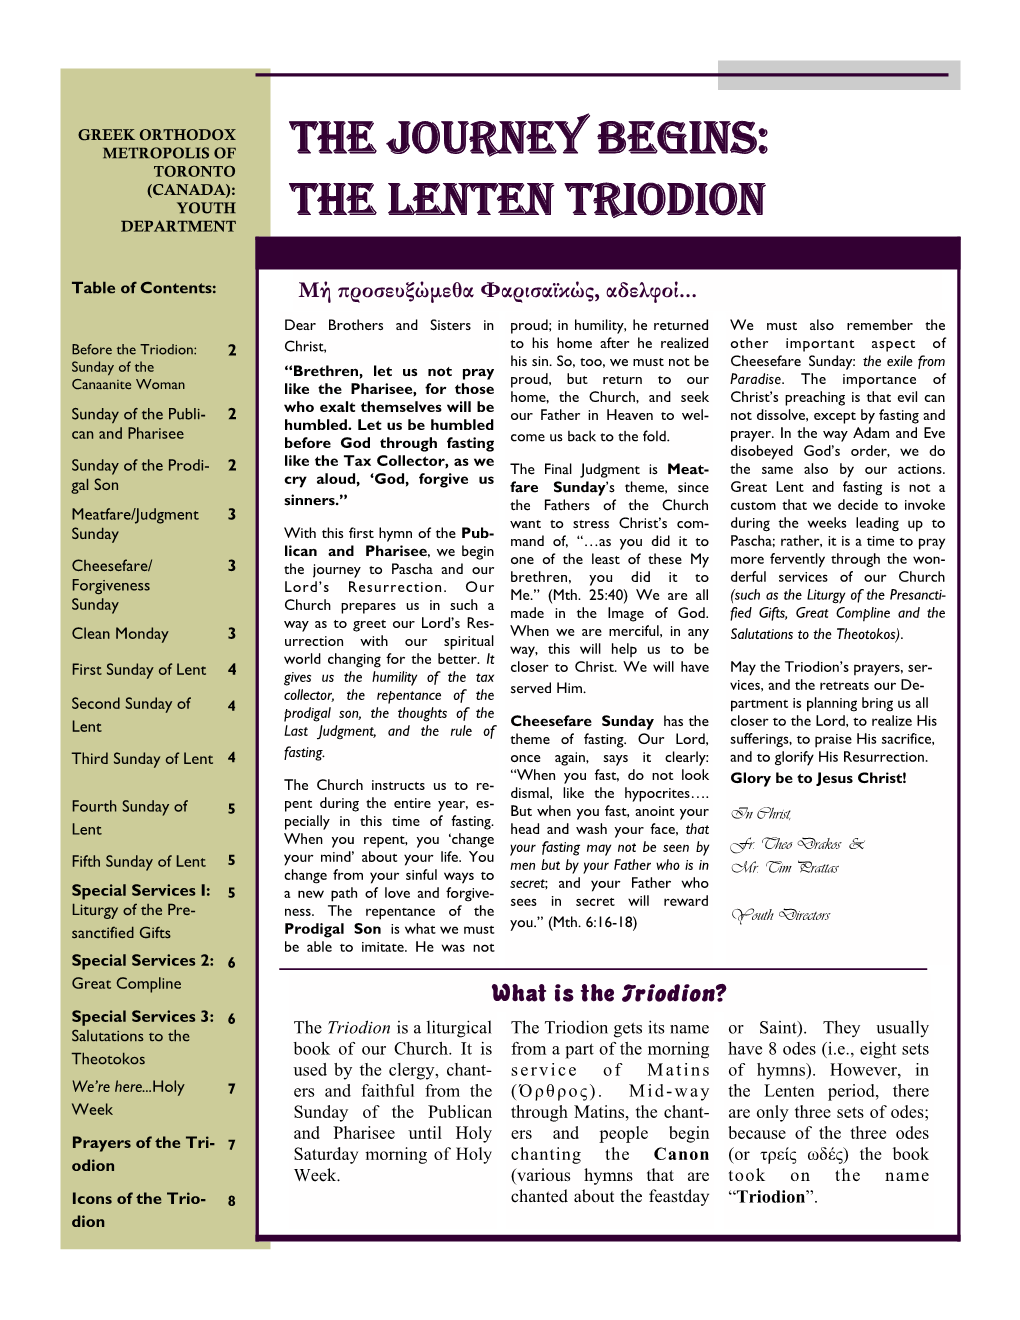 The Lenten Triodion Department